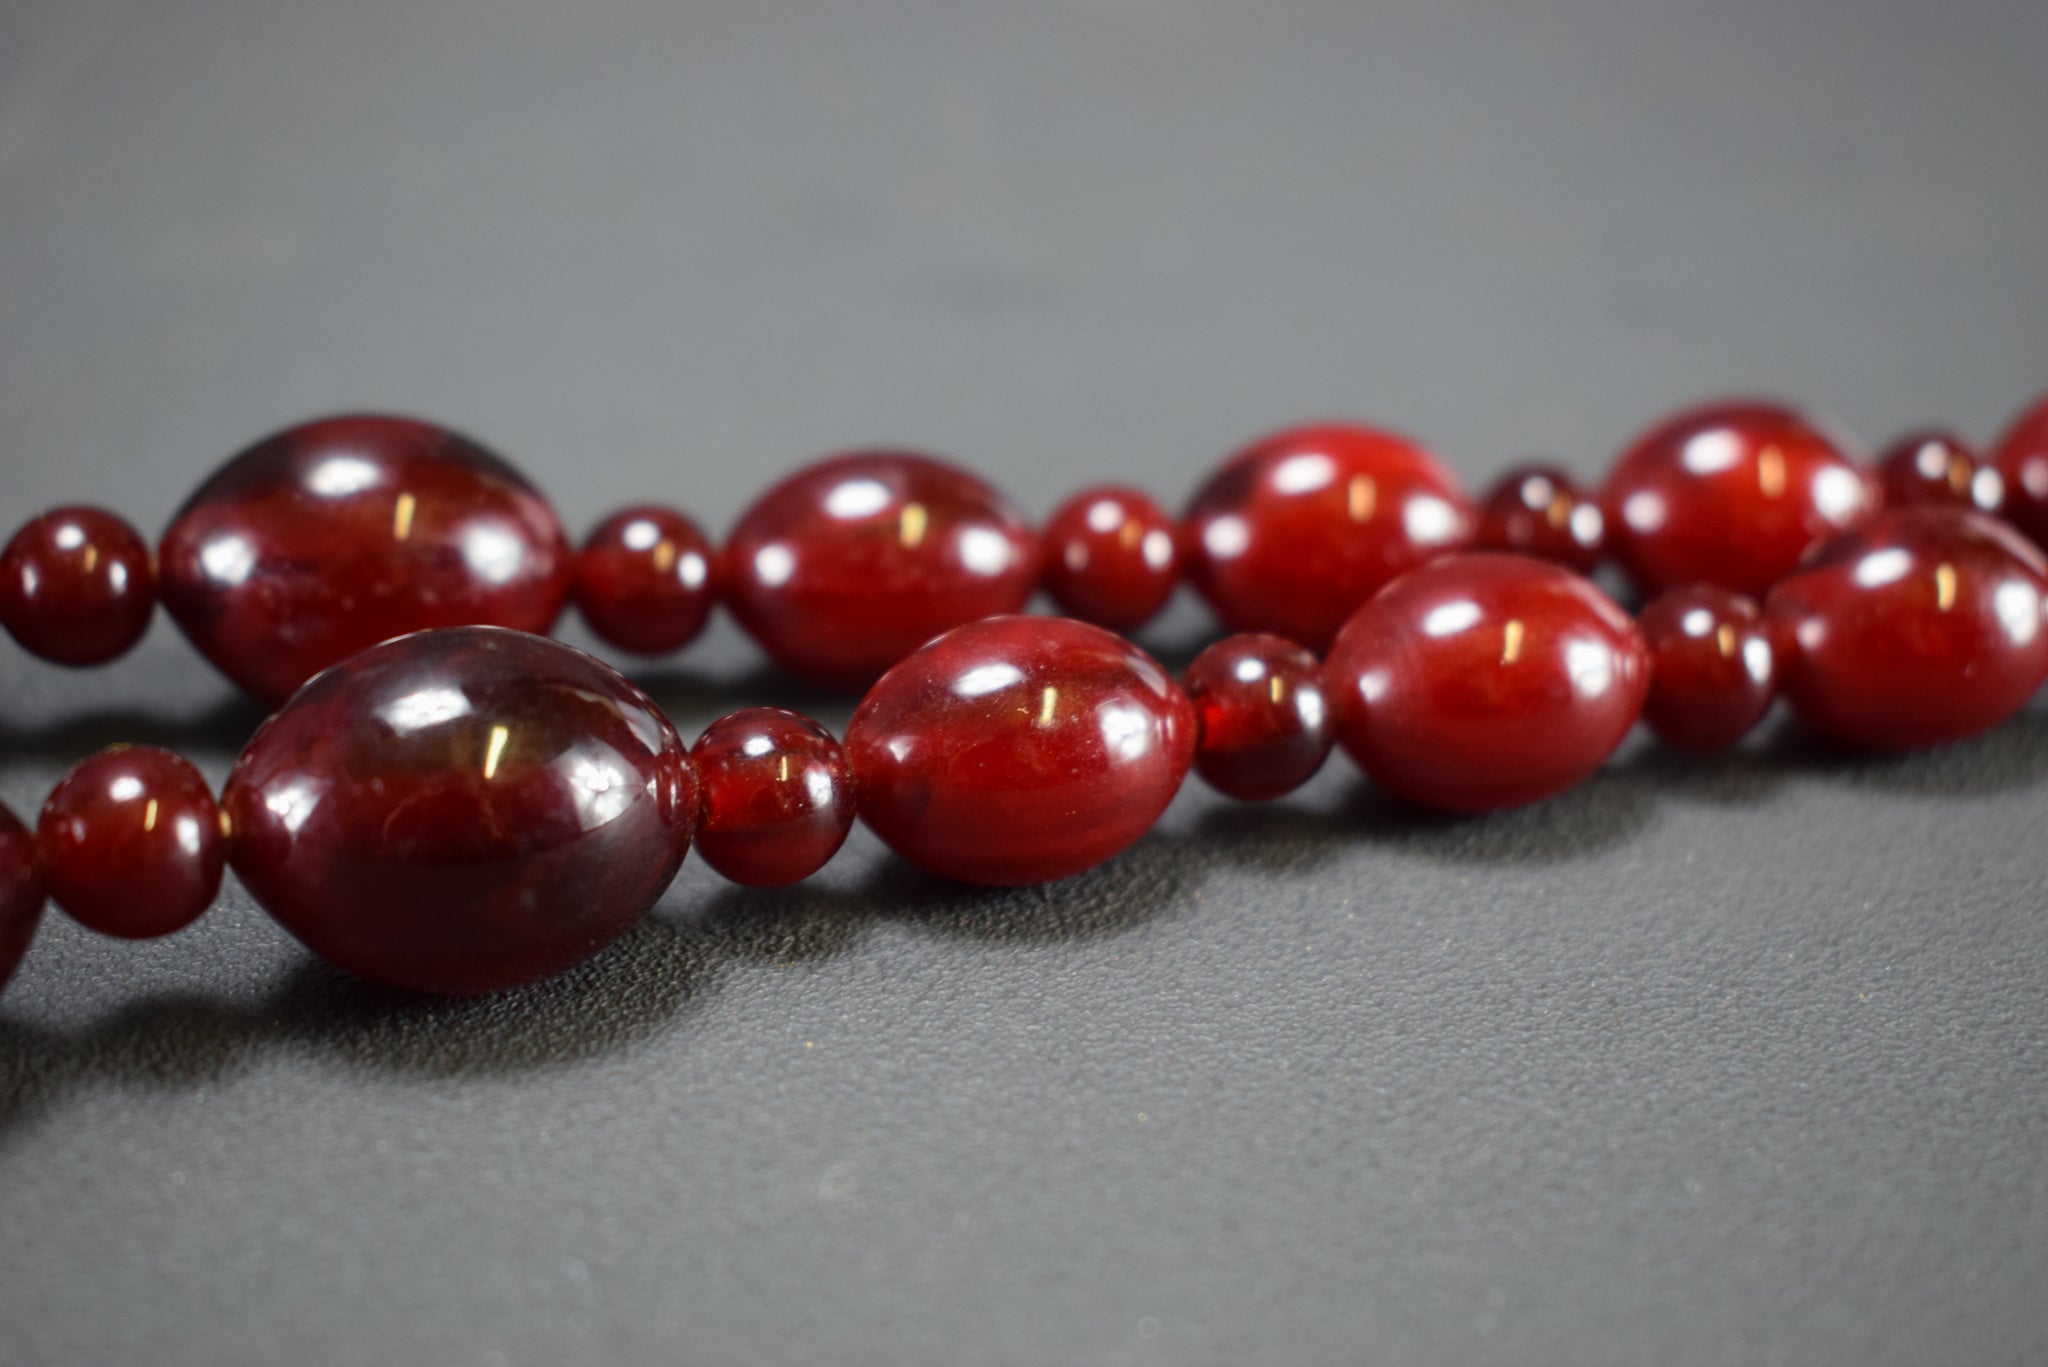 Faturan Graduated Red Cherry Amber Bakelite Beads Necklace 84g Art Deco